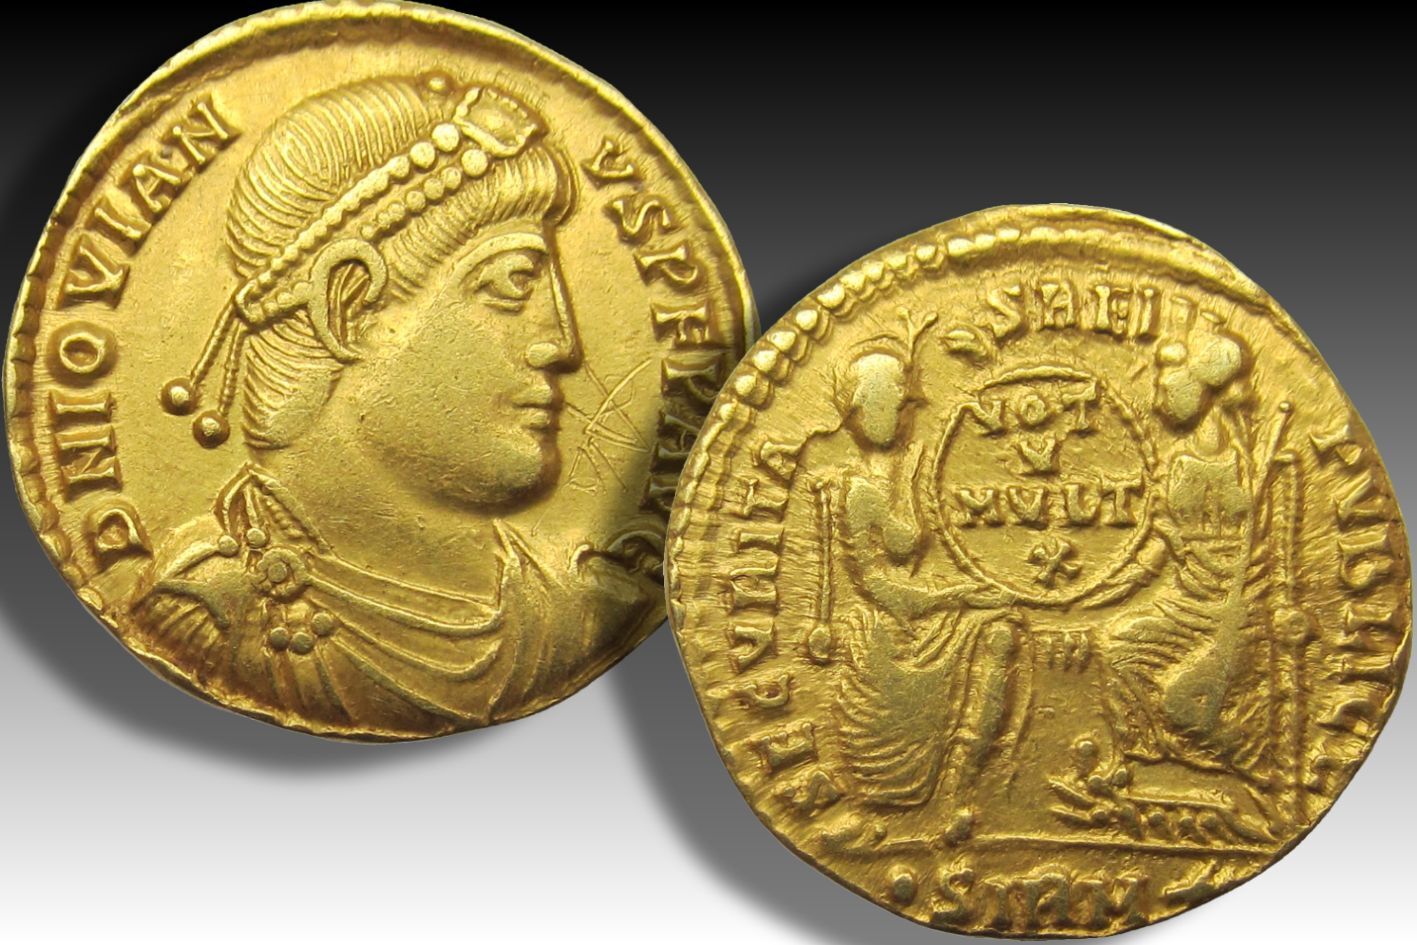 ROMAN EMPIRE AV gold solidus 363-364 Jovian Iovianus, Sirmium mint-  rare cointype from a scarcer emperor VF+ EF-superb portrait, graffiti  on obverse righ MA-Shops